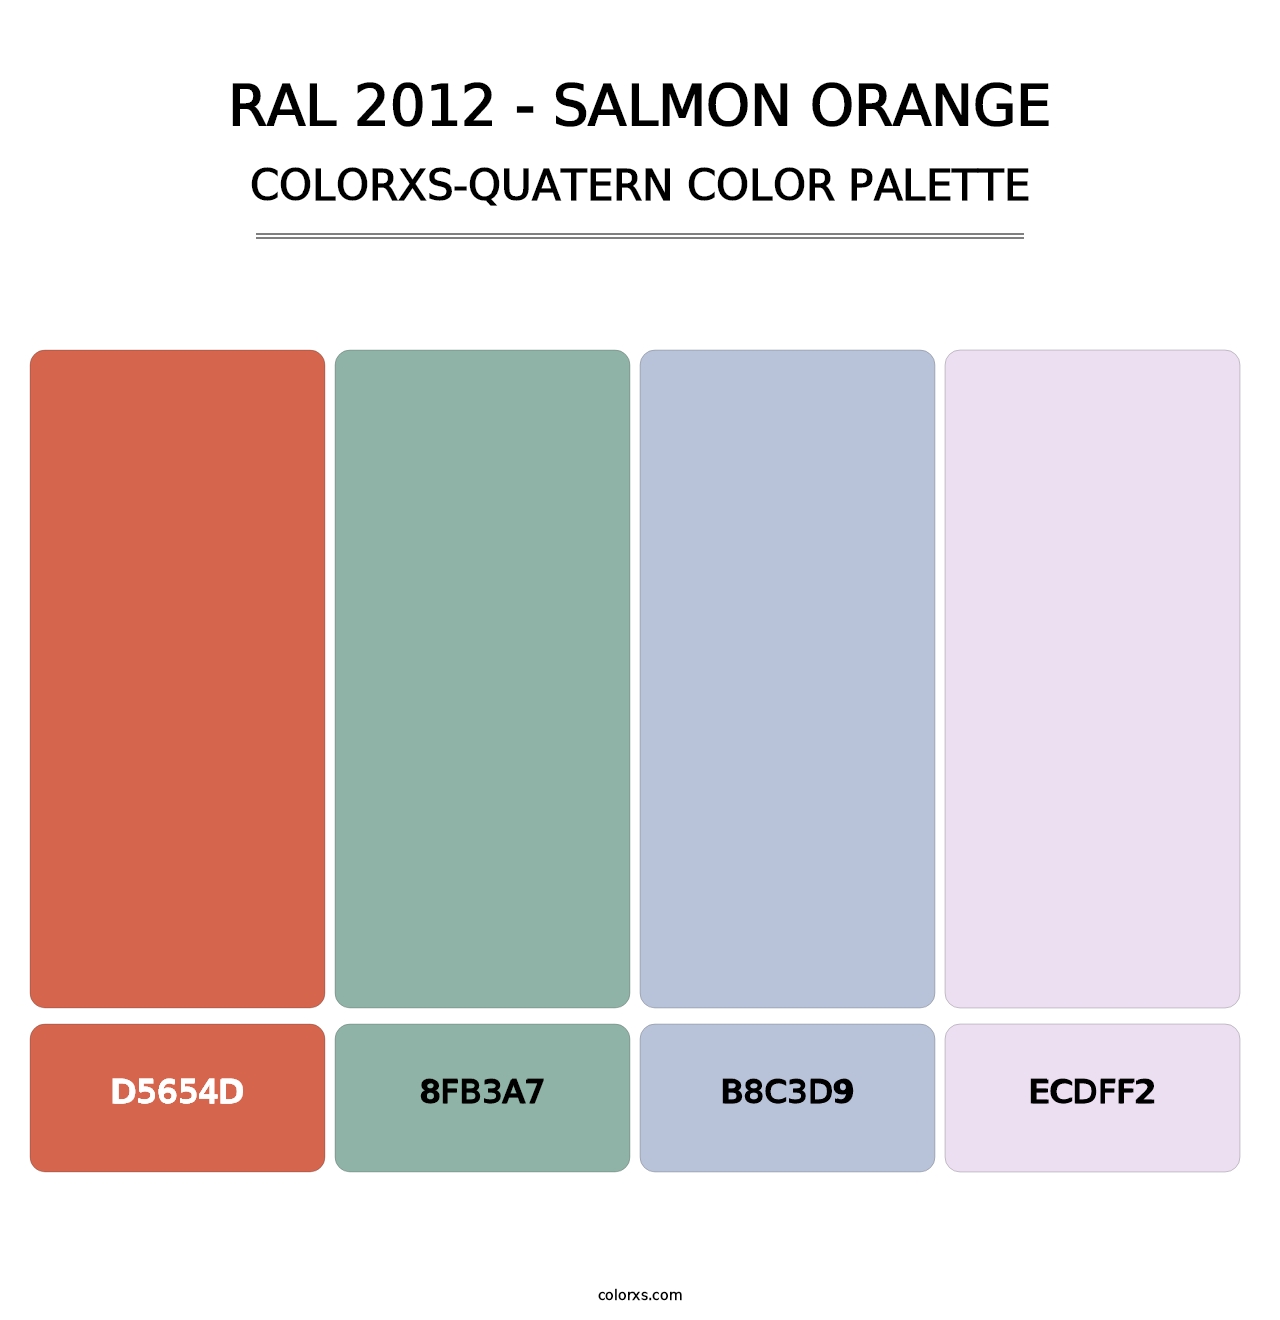 RAL 2012 - Salmon Orange - Colorxs Quatern Palette